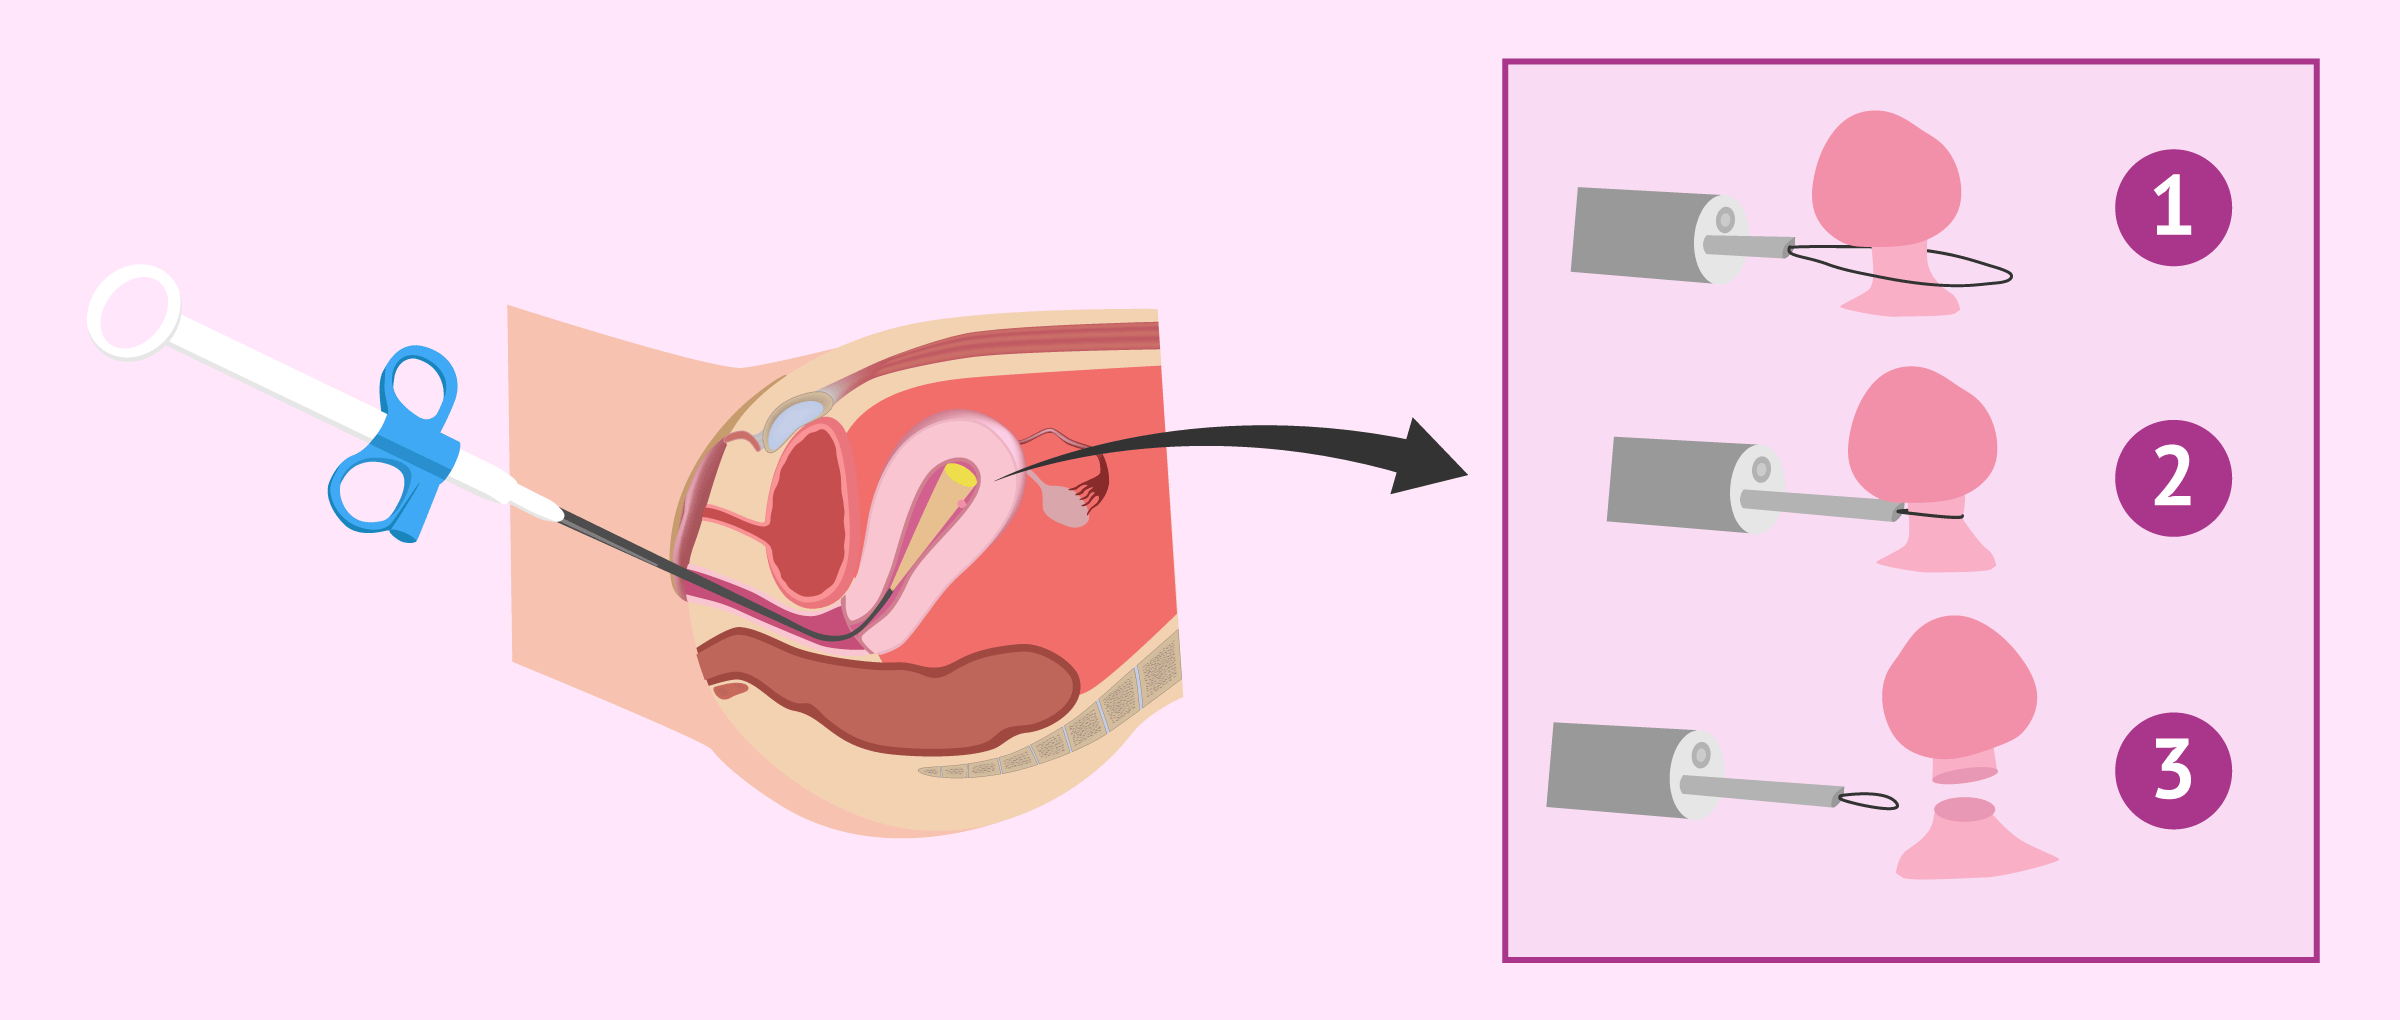 Polypectomy procedure